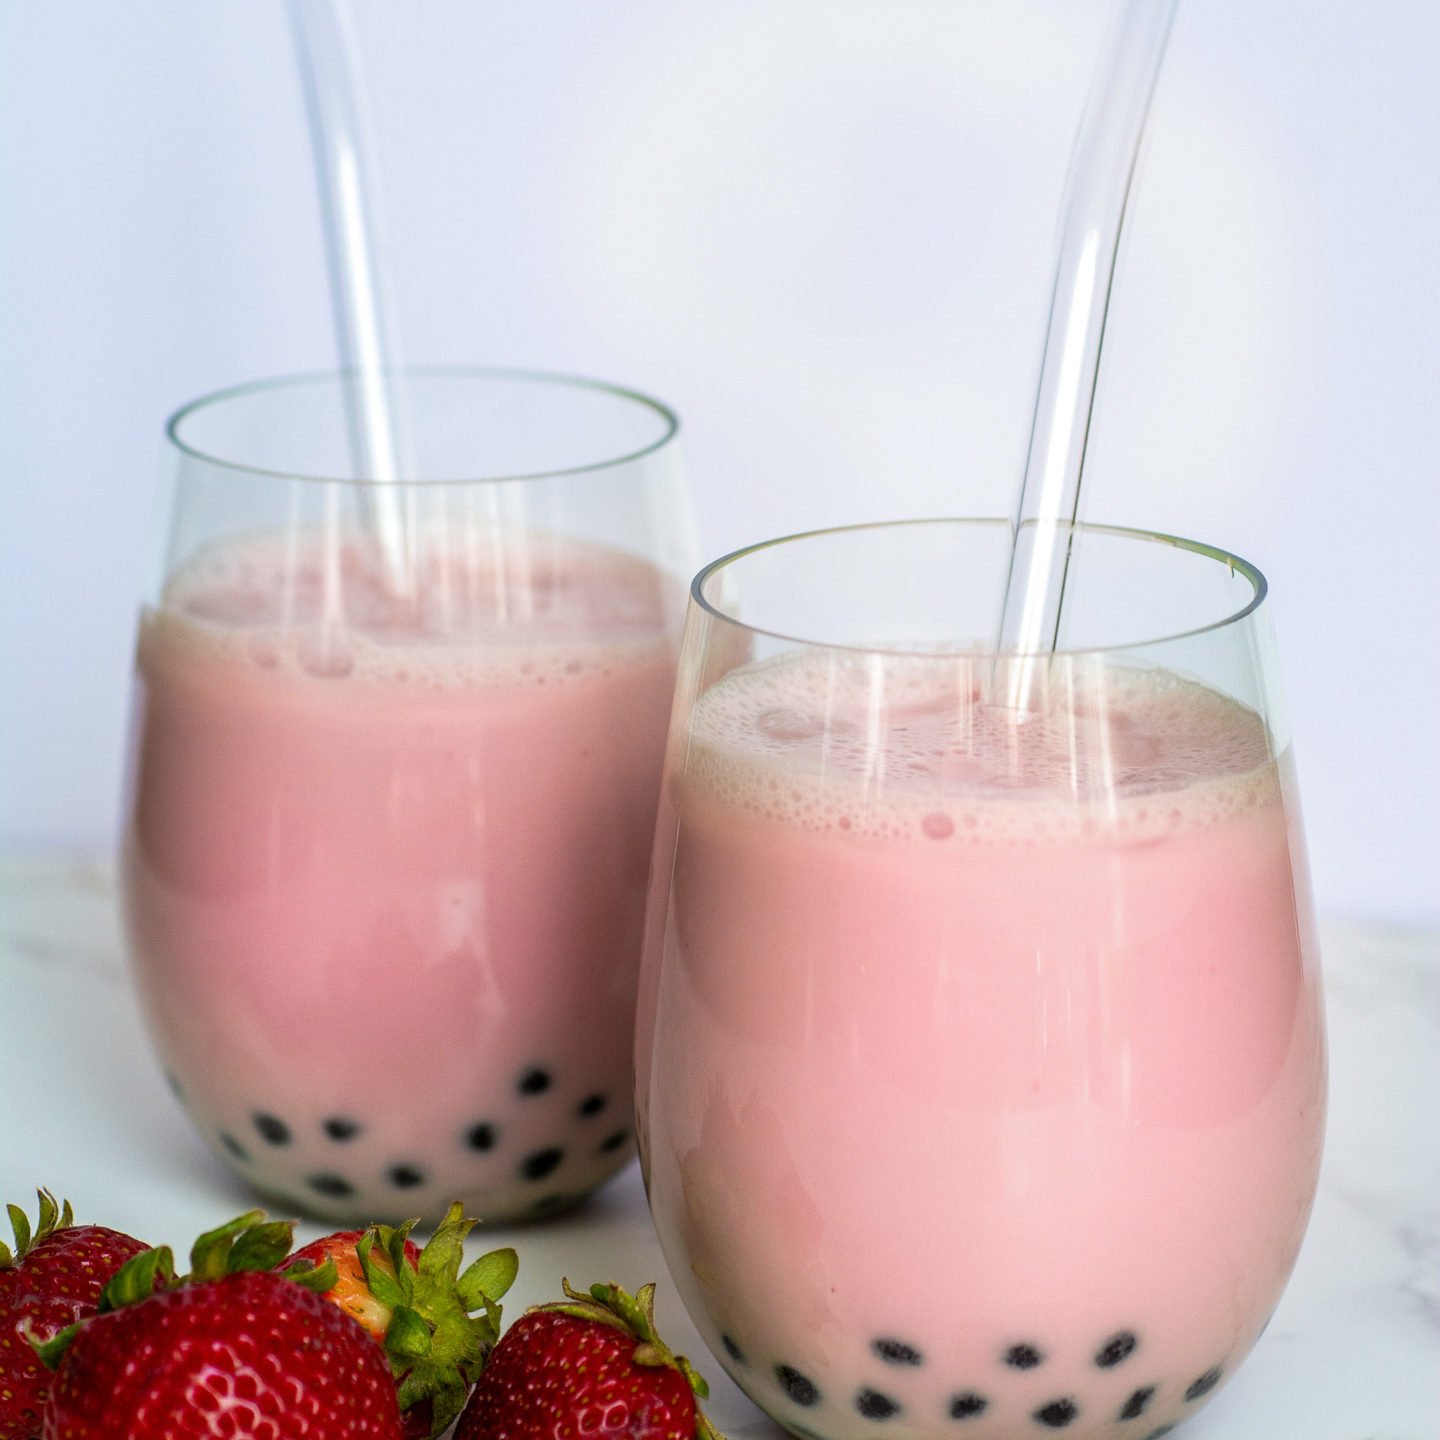 strawberry milk tea with boba pearls